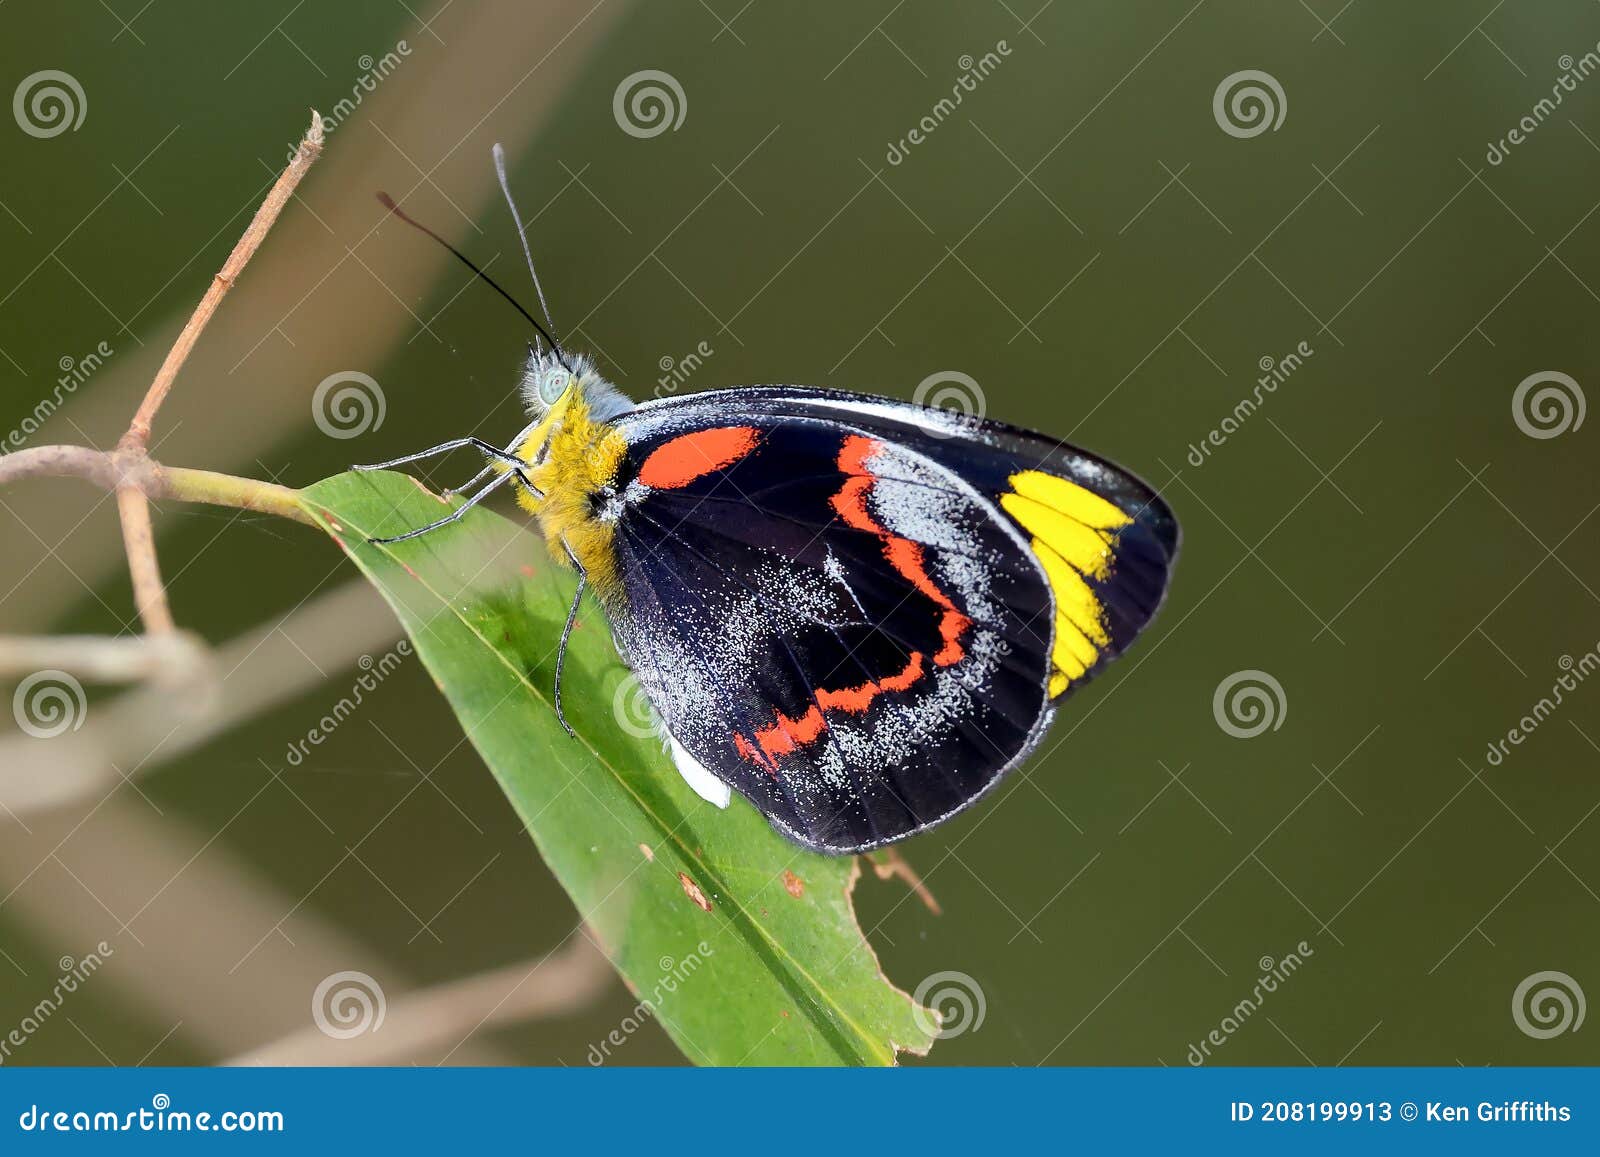 black jezebel butterfly